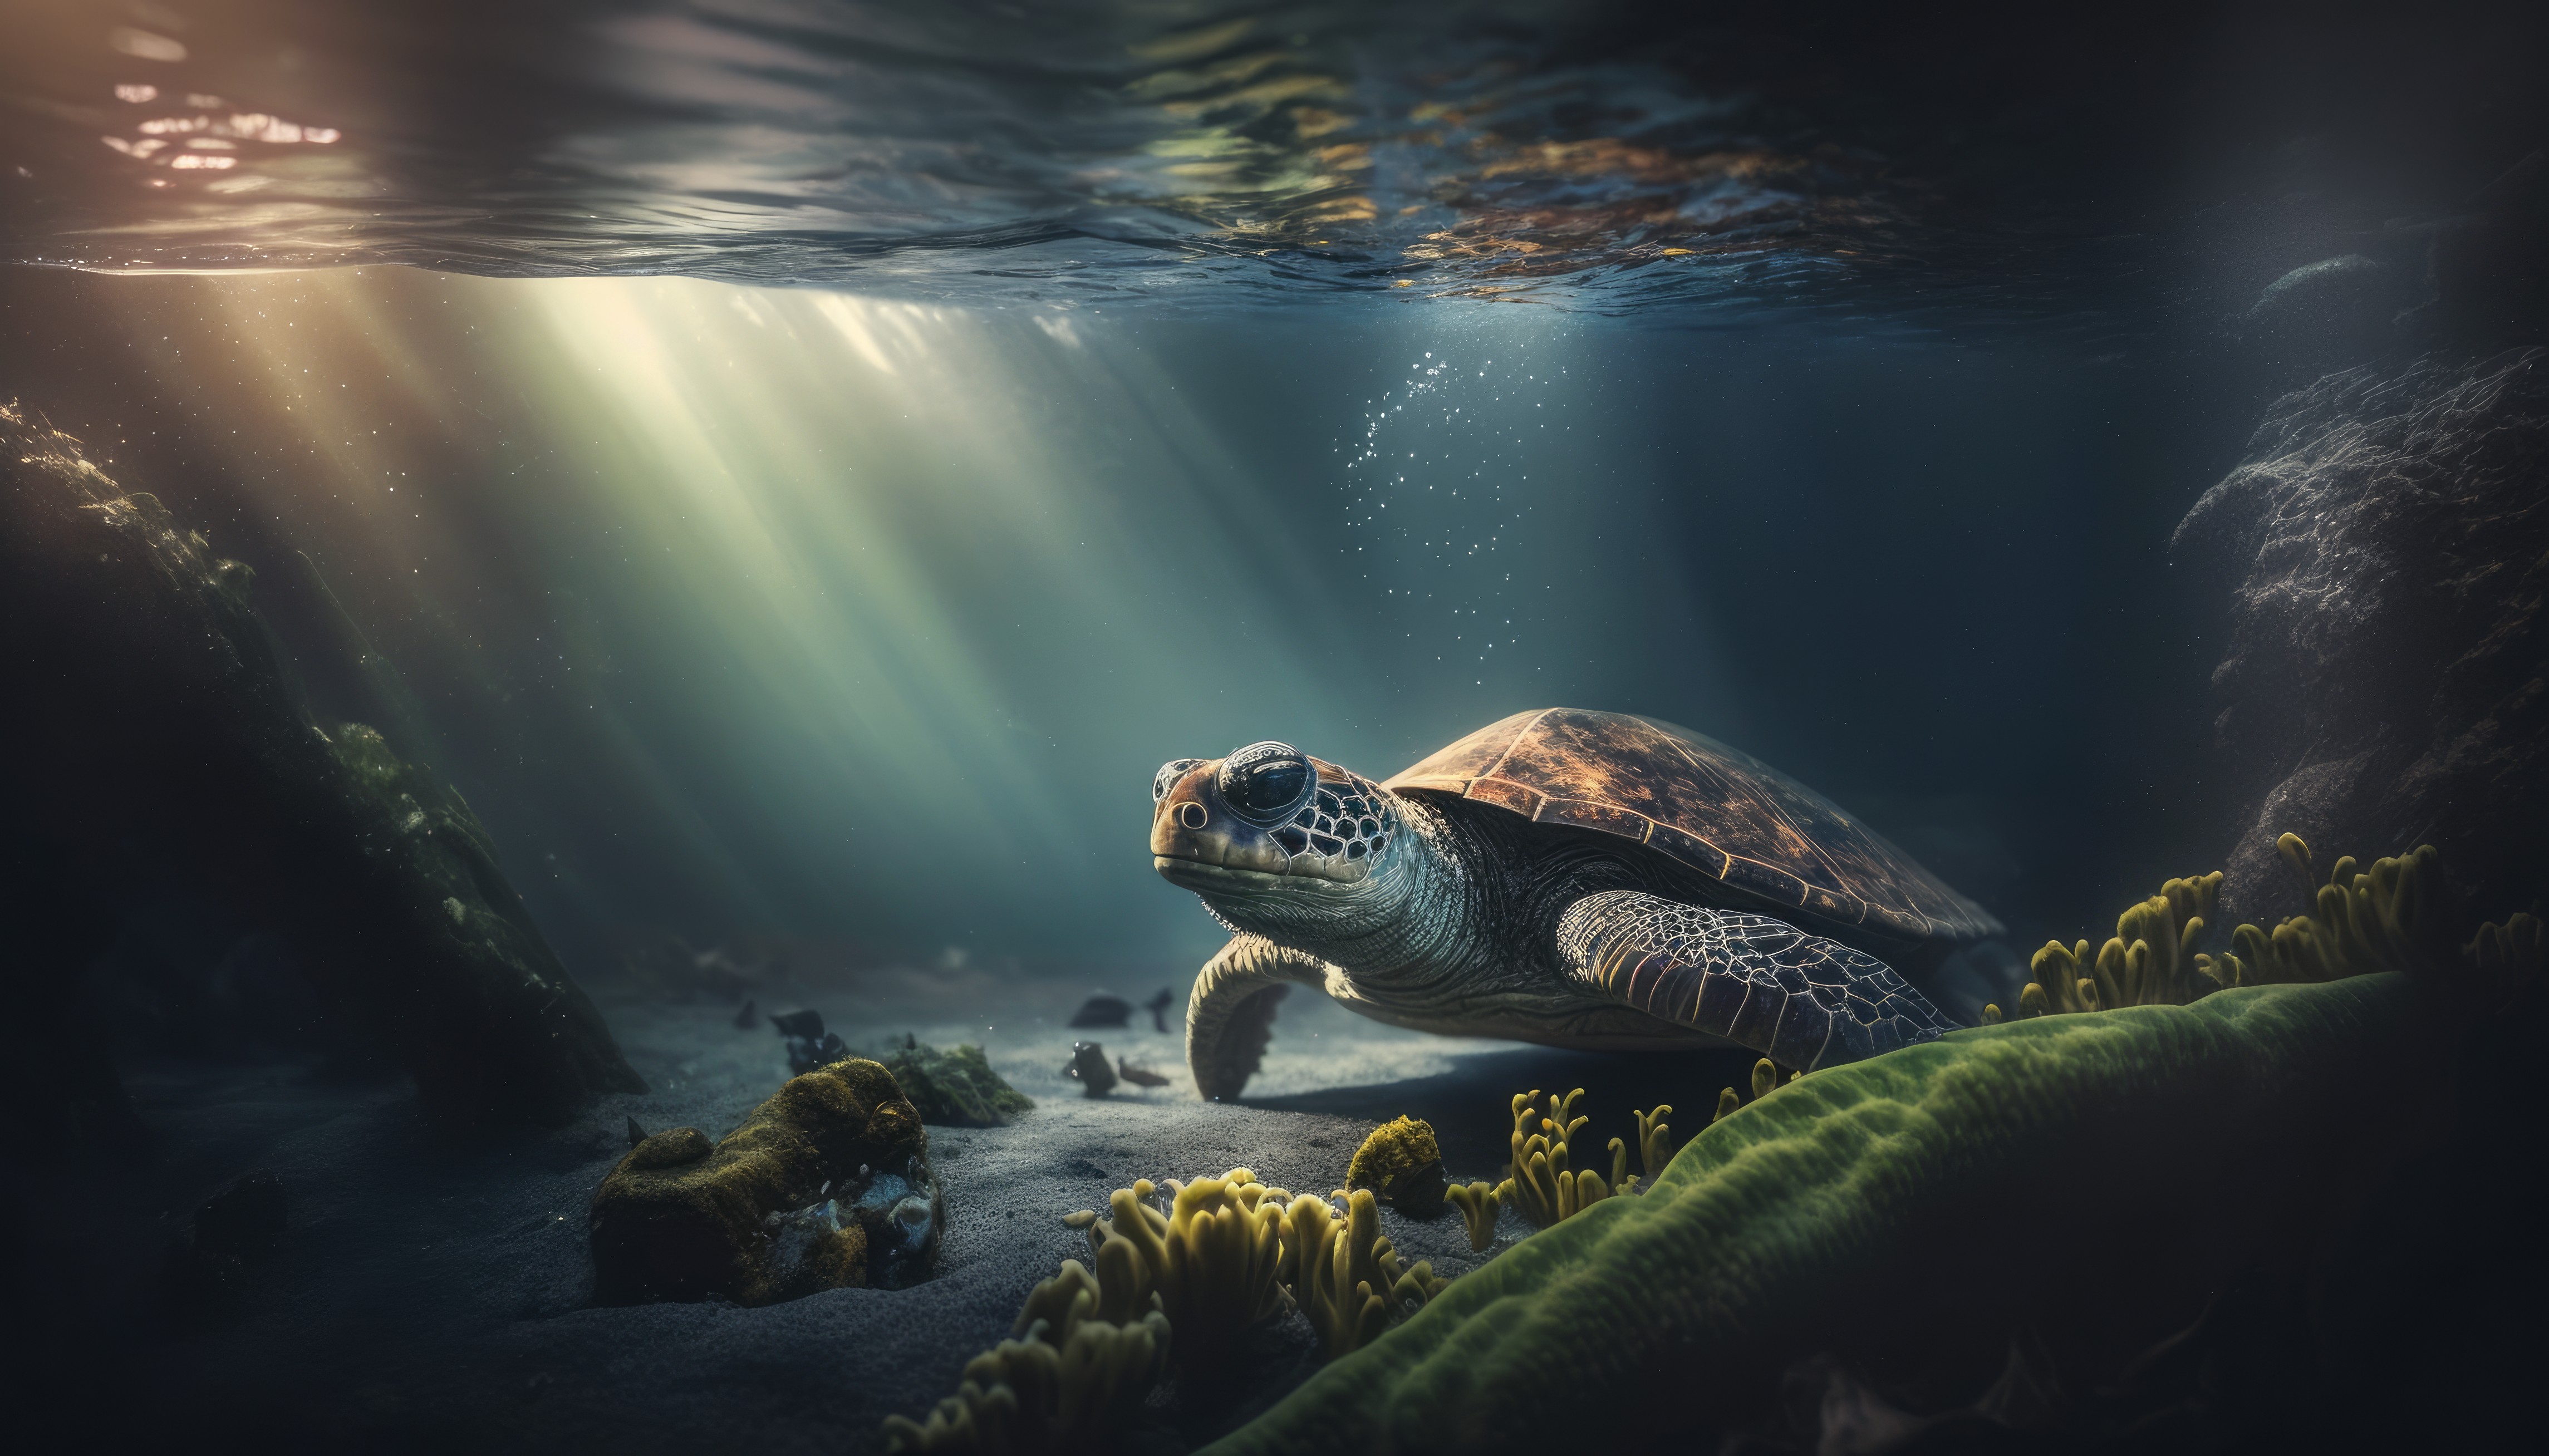 General 4579x2616 AI art animals turtle underwater sea floor water sunlight nature in water